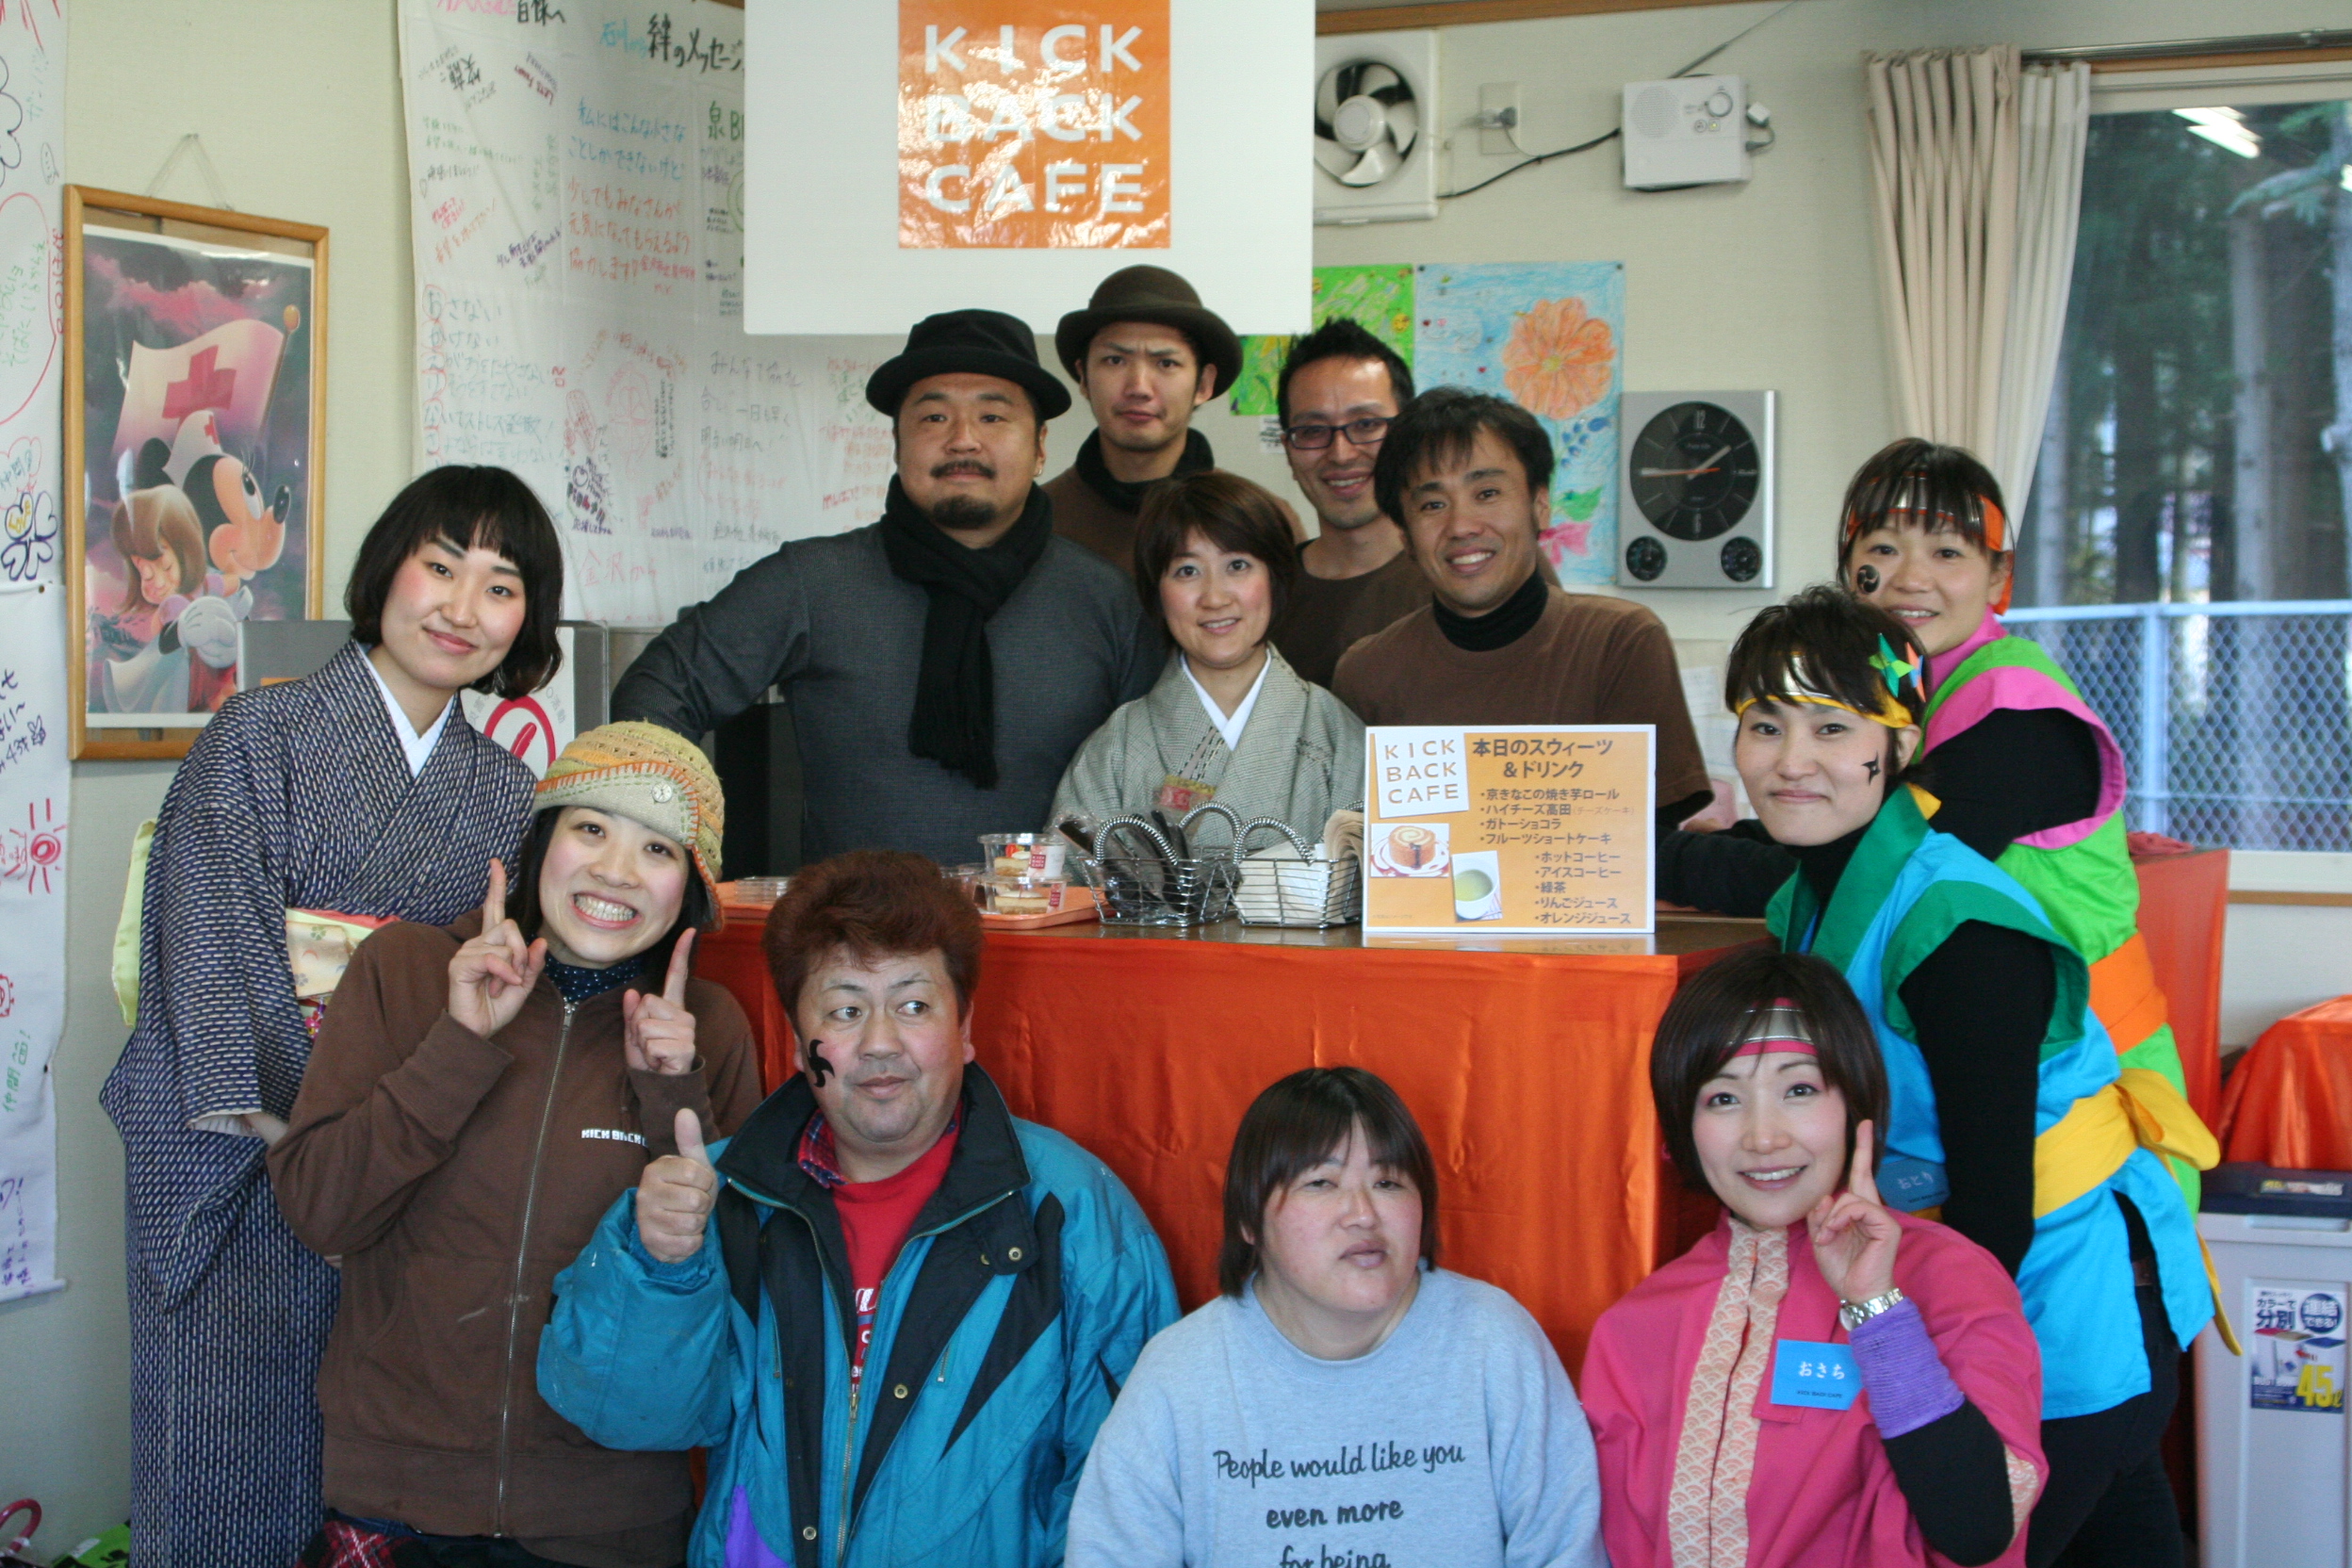 http://www.kickbackcafe.jp/support2/report/IMG_6025.JPG